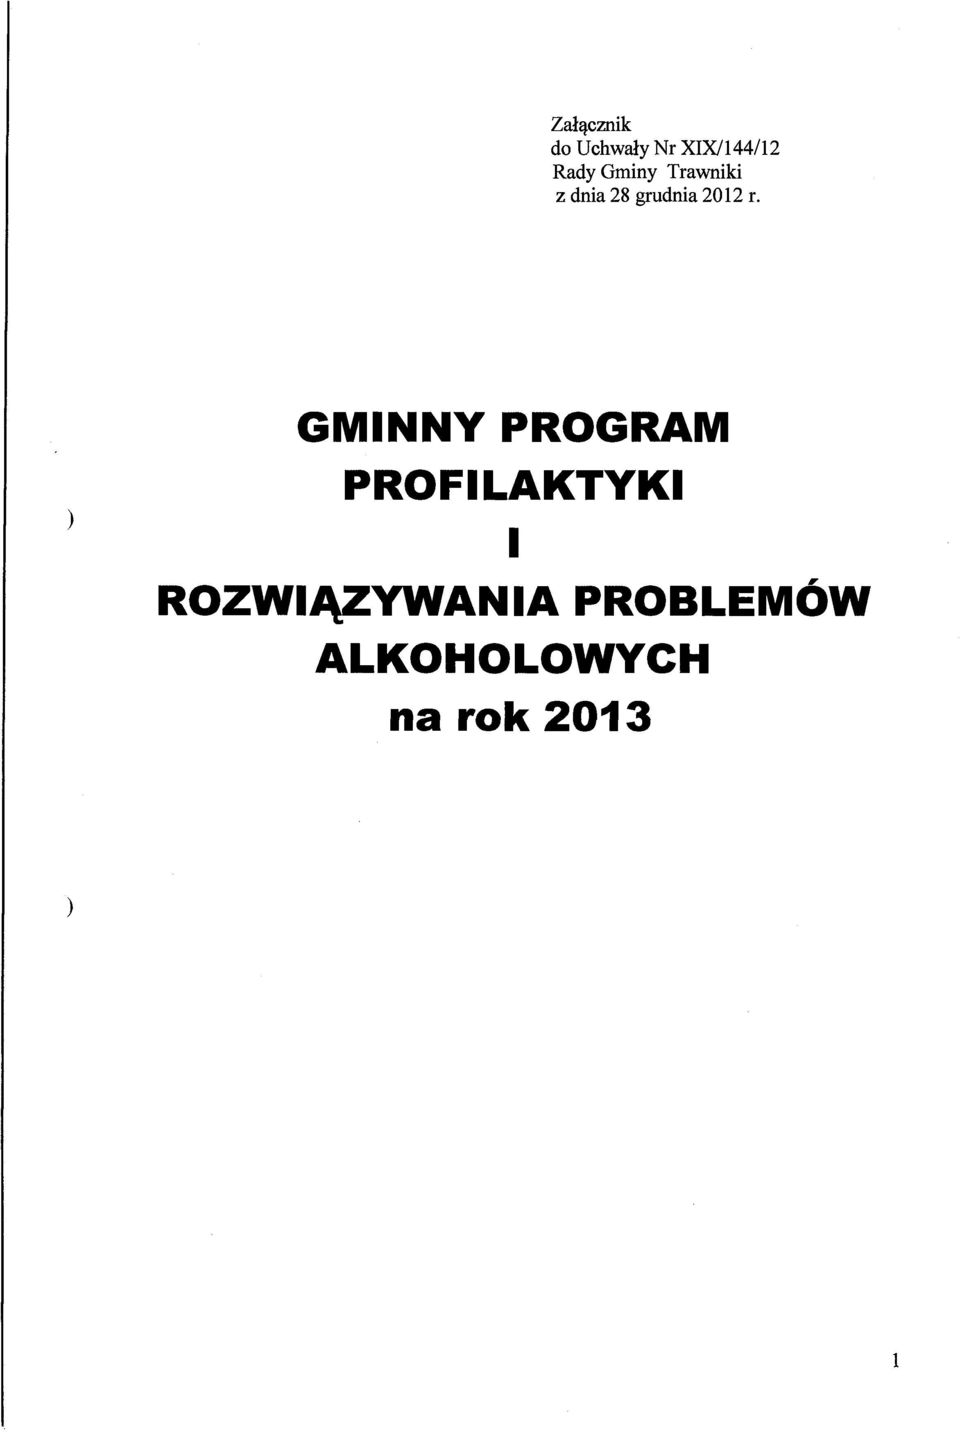 GMINNY PROGRAM PROFILAKTYKI I